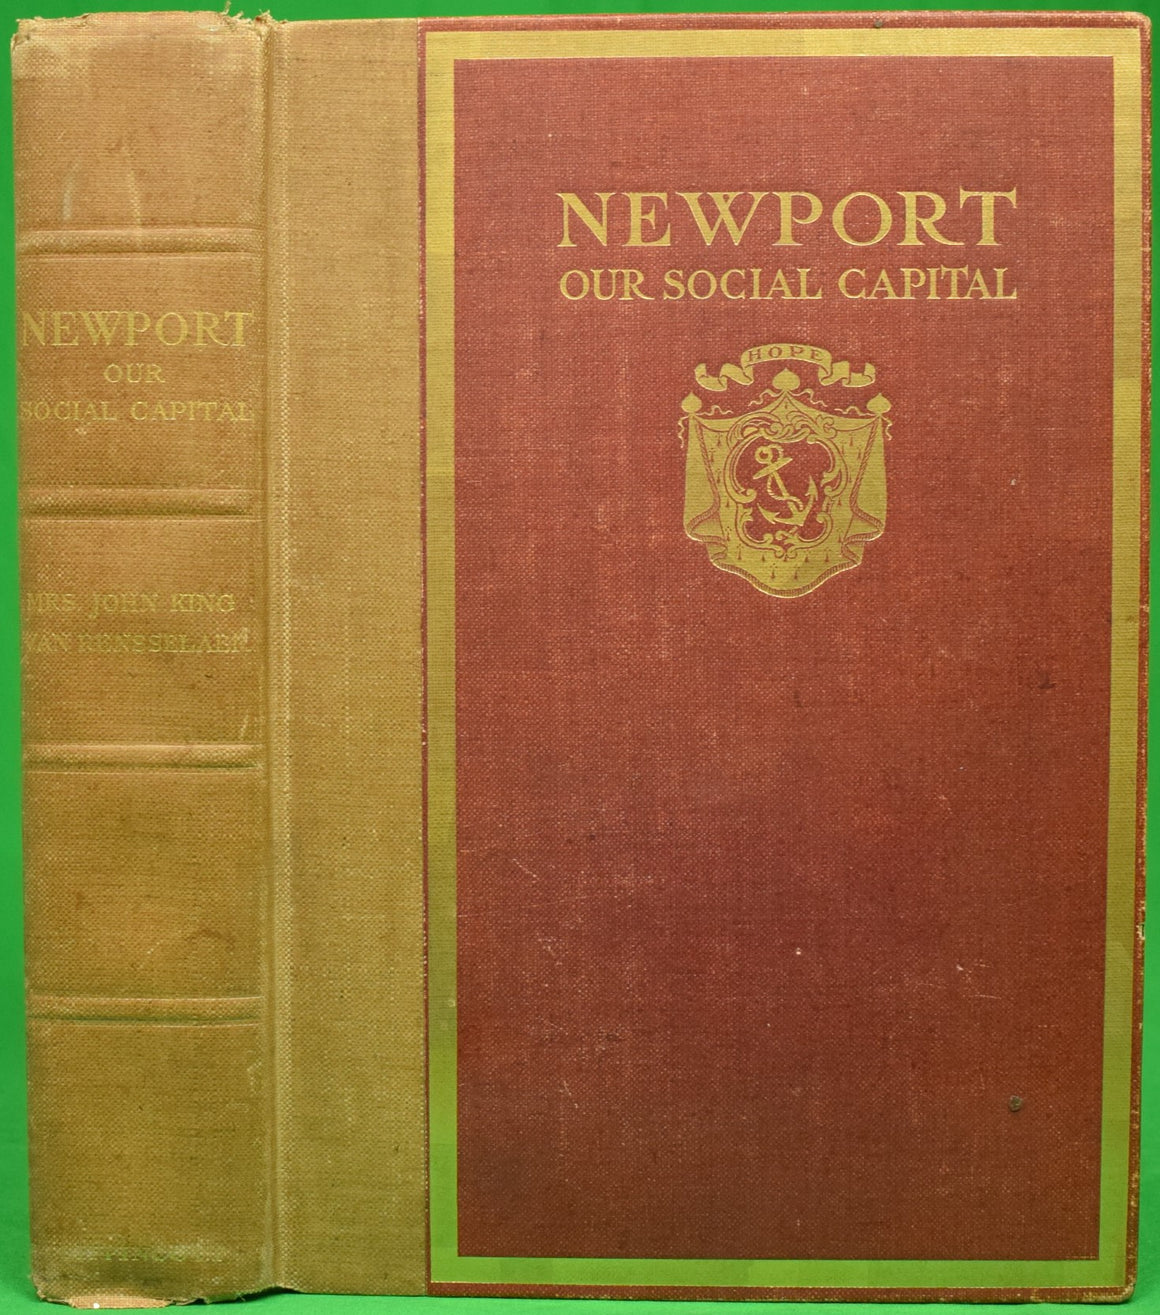 "Newport: Our Social Capital" VAN RENSSELAER, Mrs. John King